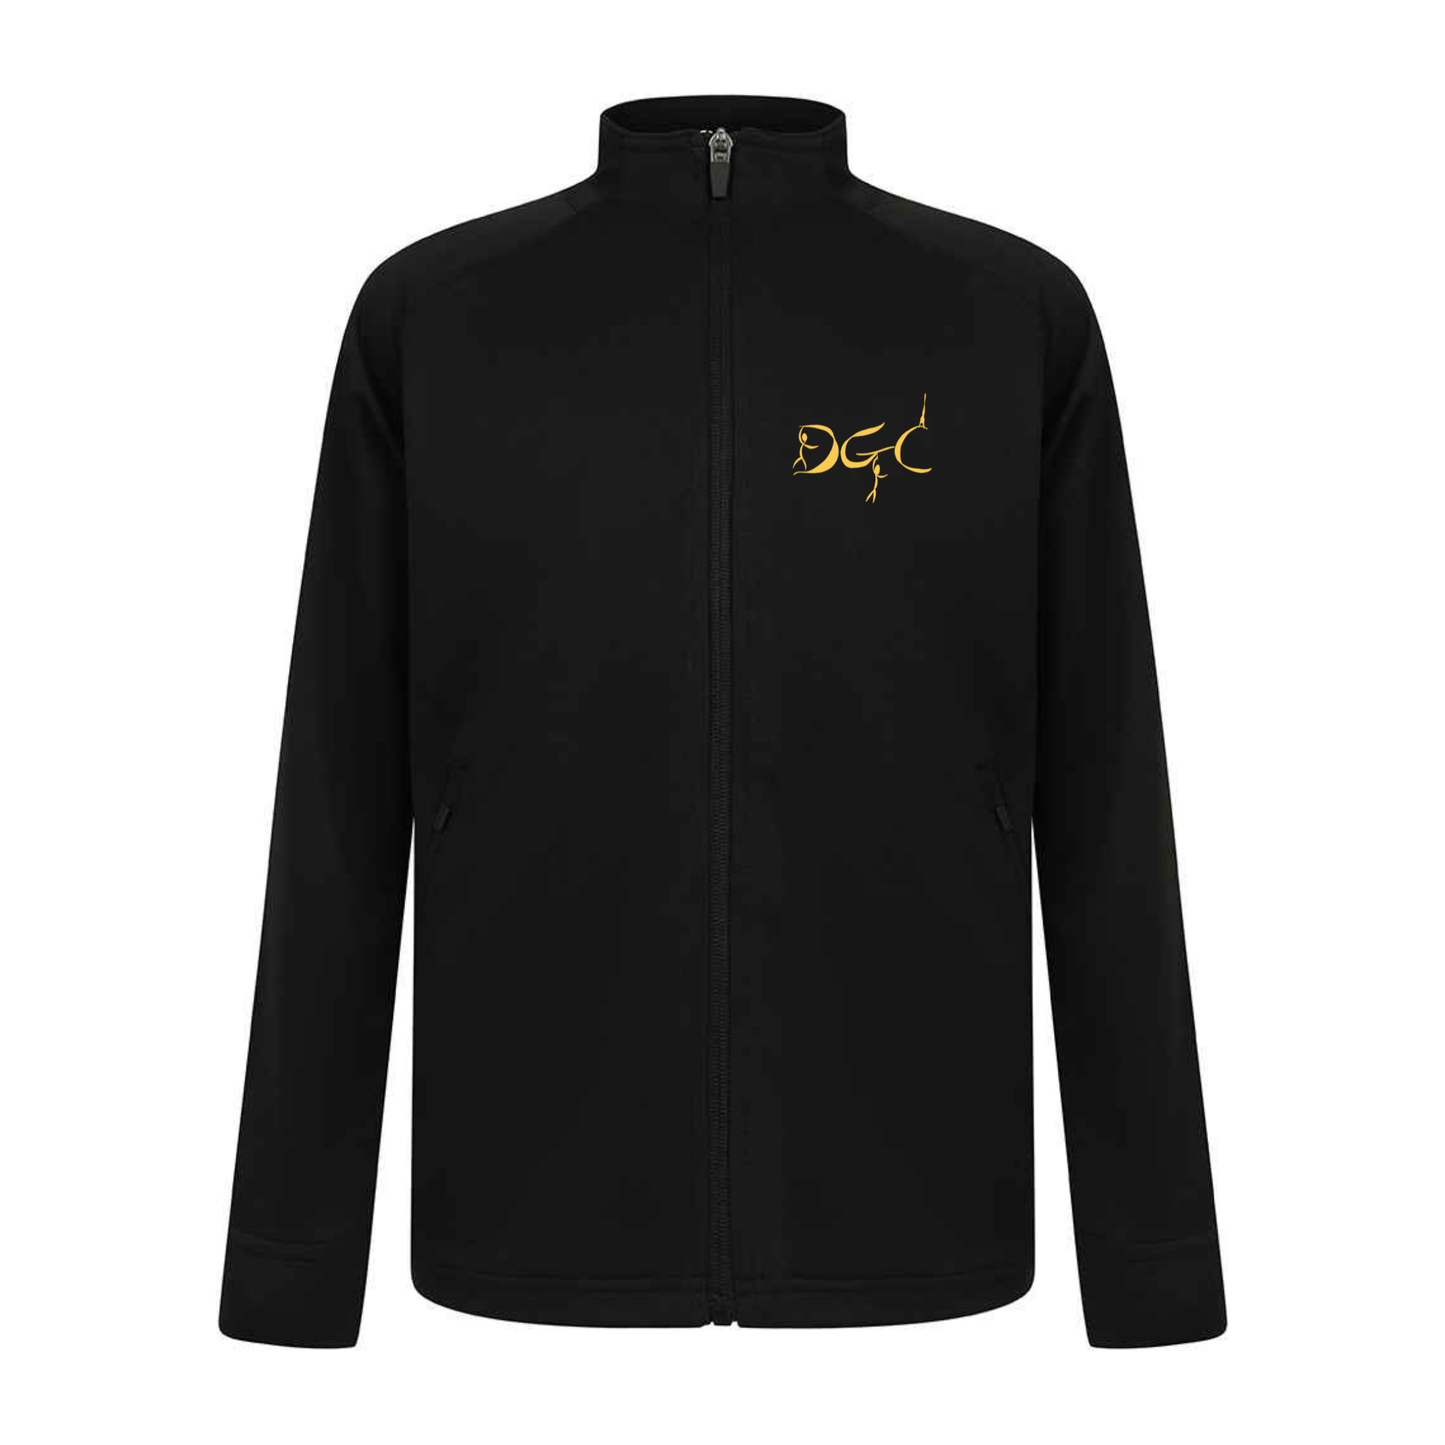 Dysons Coach Team Wear Tracksuit Set Black - Gold Logo